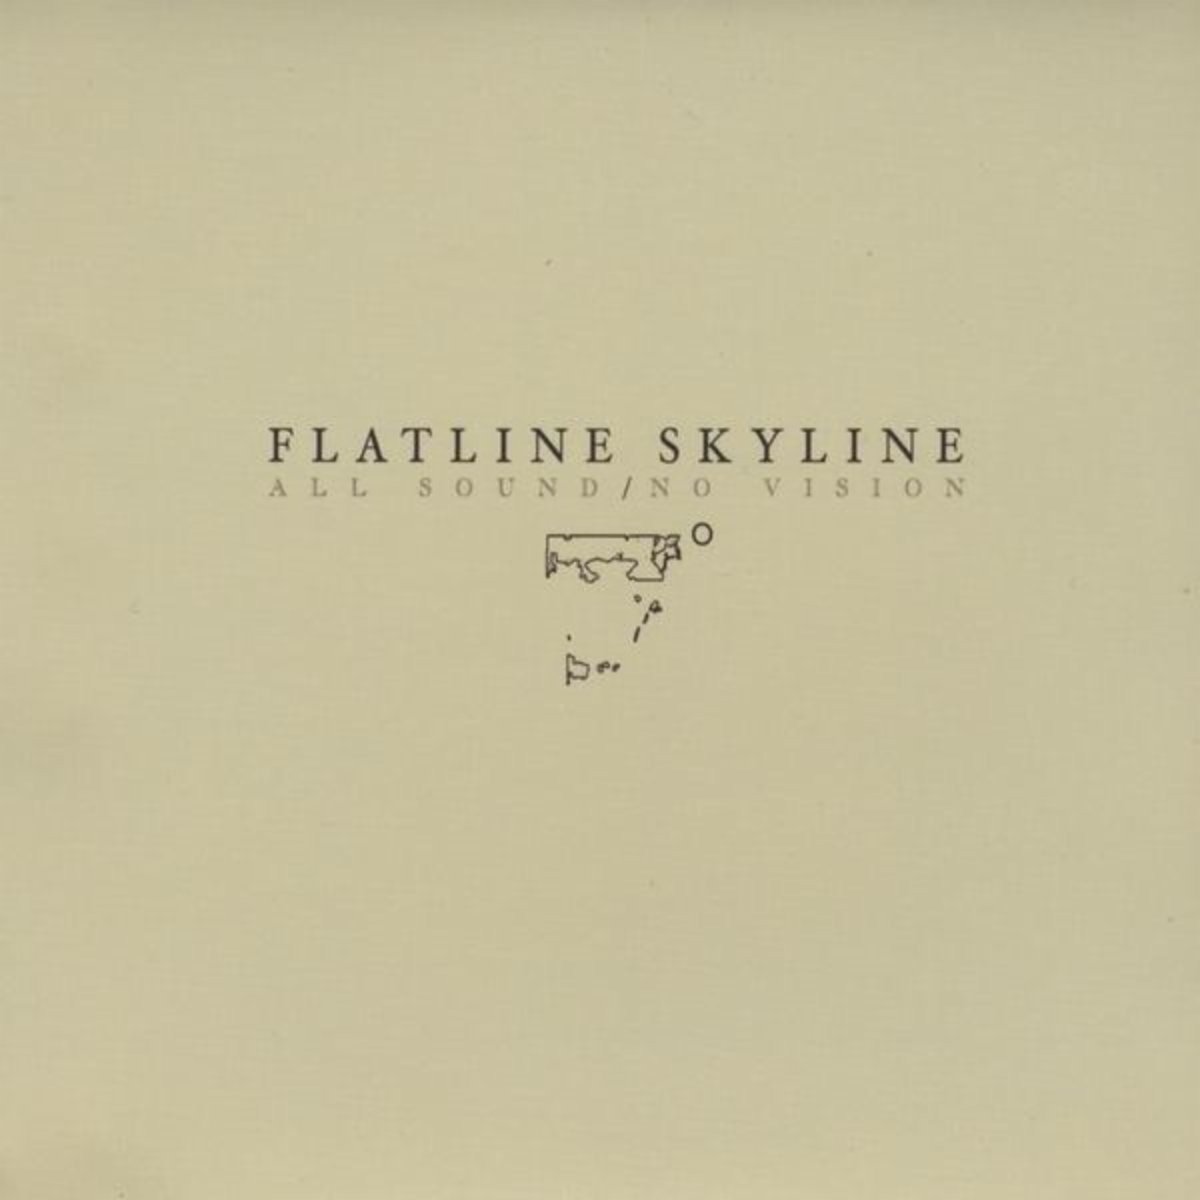 CD Shop - FLATLINE SKYLINE ALL SOUND/NO VISION